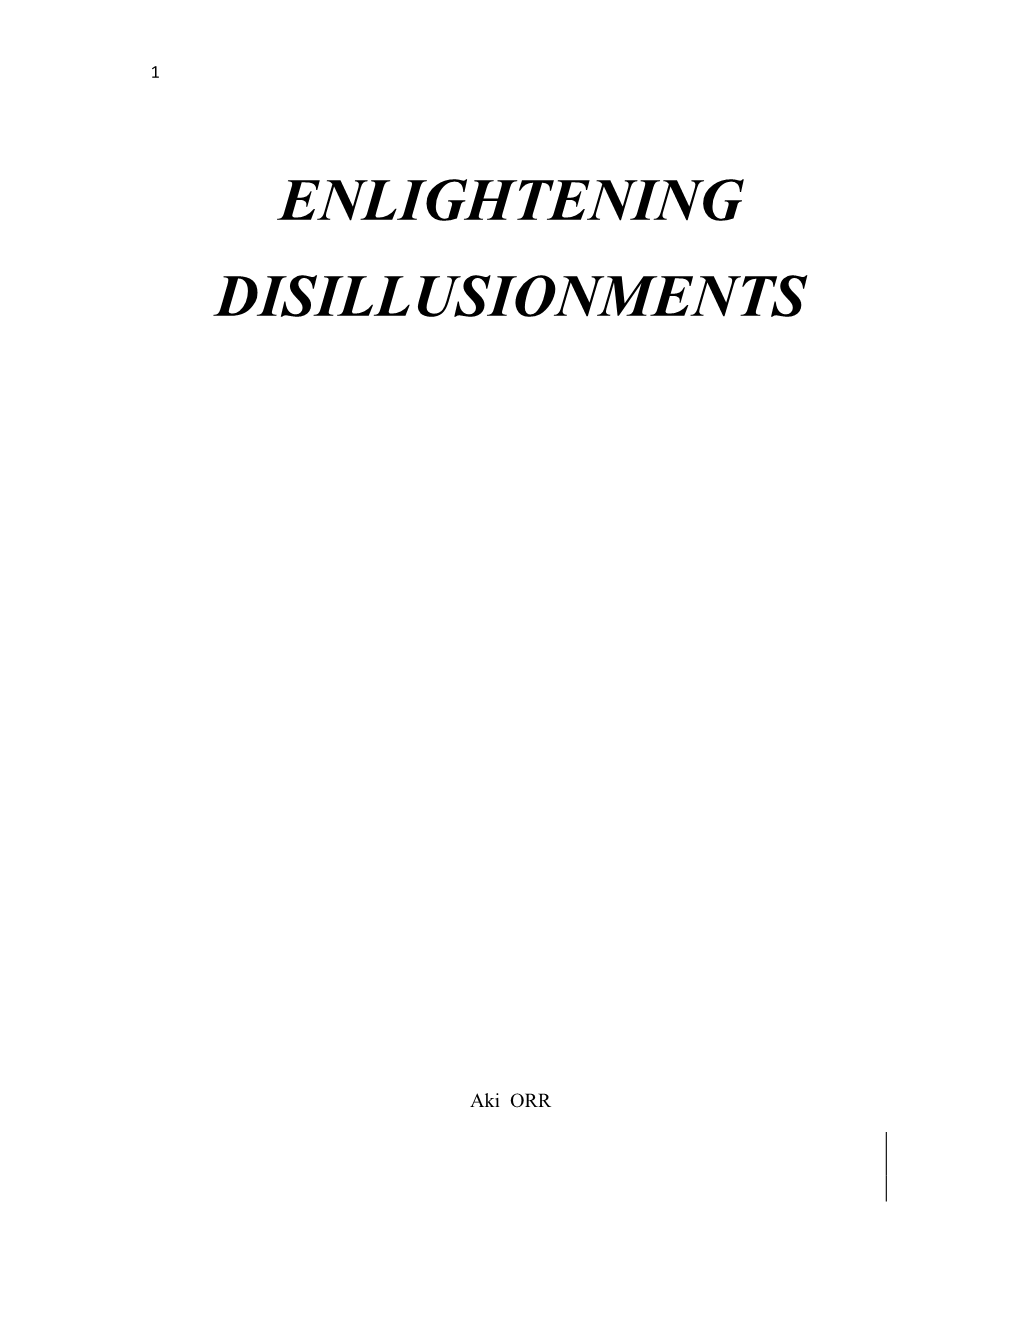 Enlightening Disillusionments